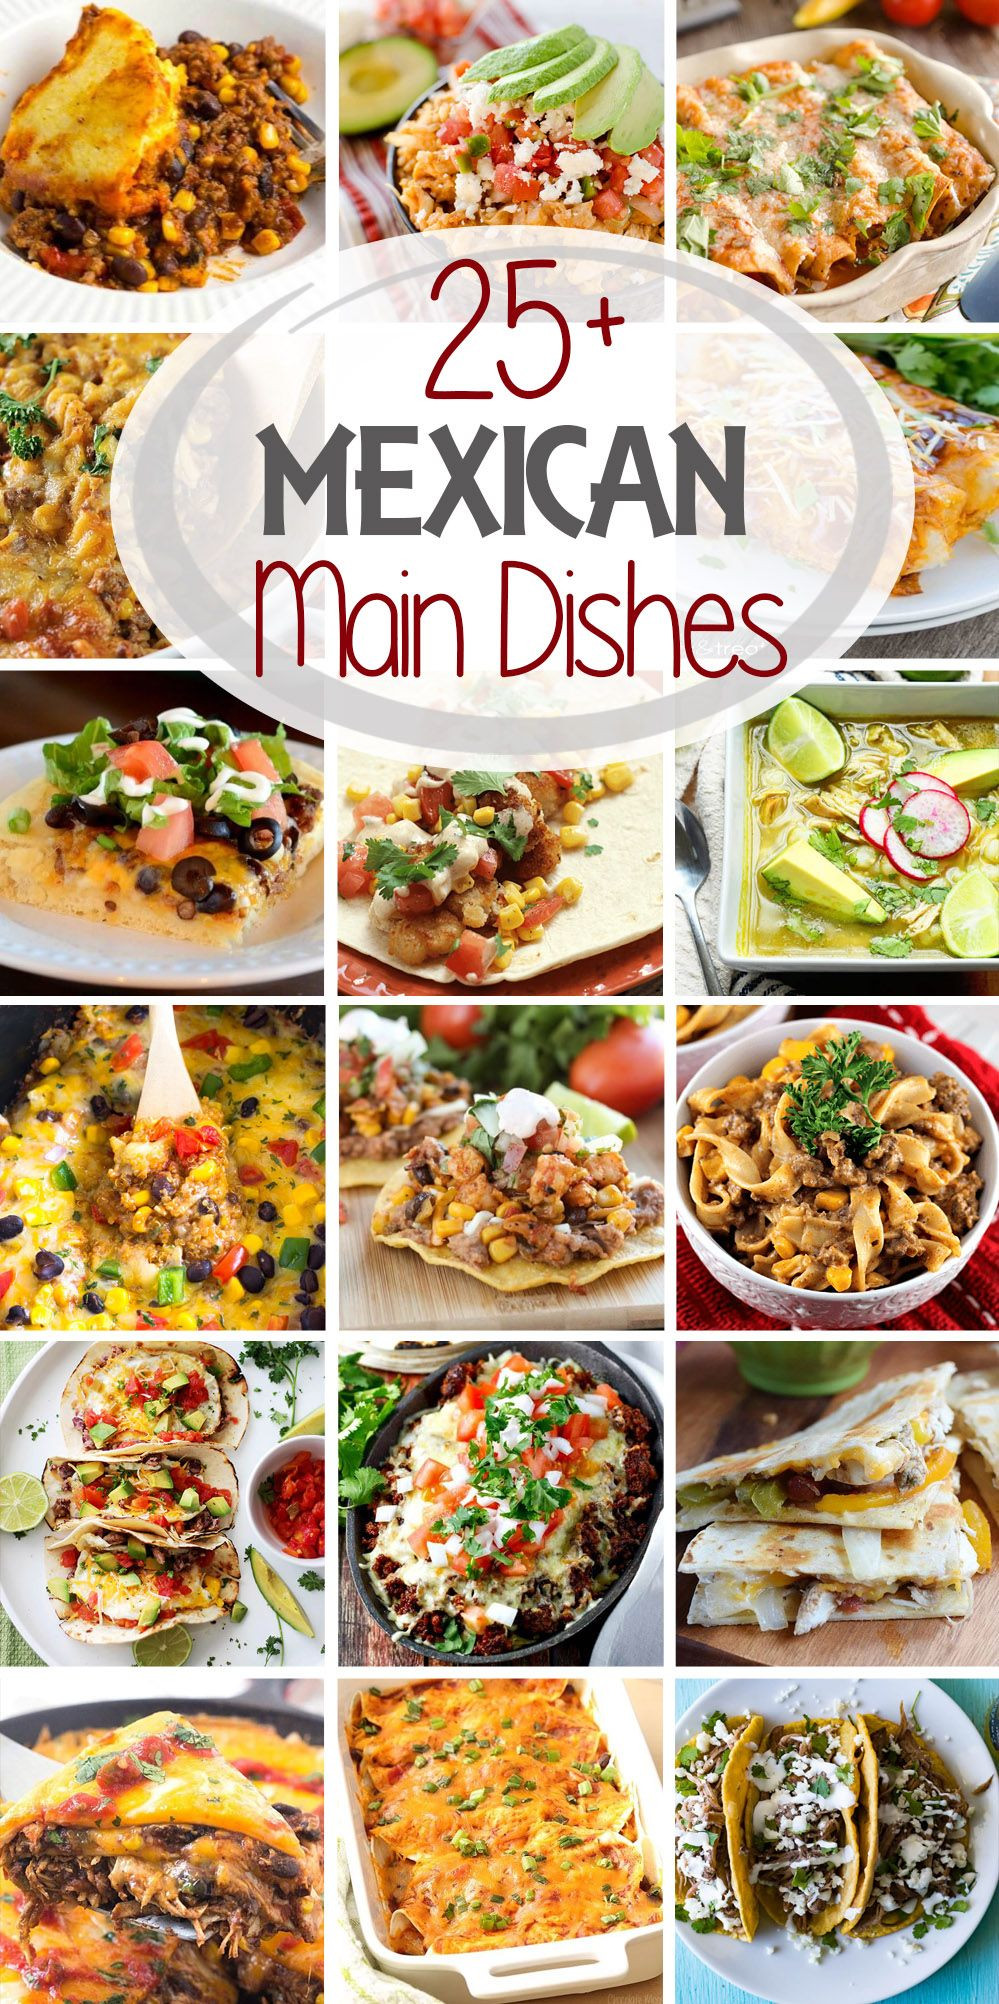 Mexican Main Dishes Recipes
 25 Mexican Main Dish Recipes